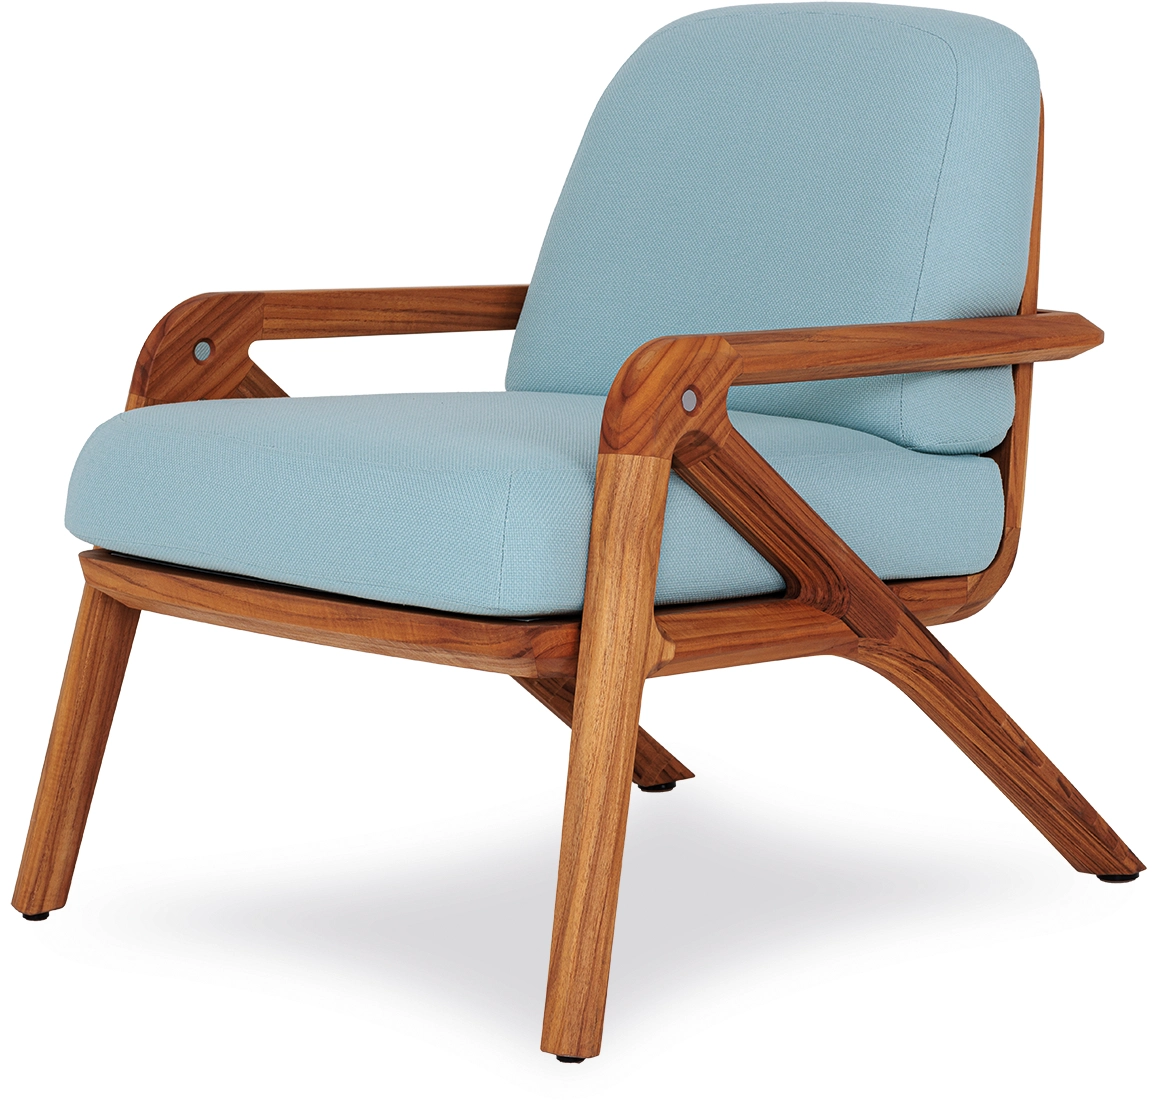 Riviera lounge chair, designed by Espen Oeino